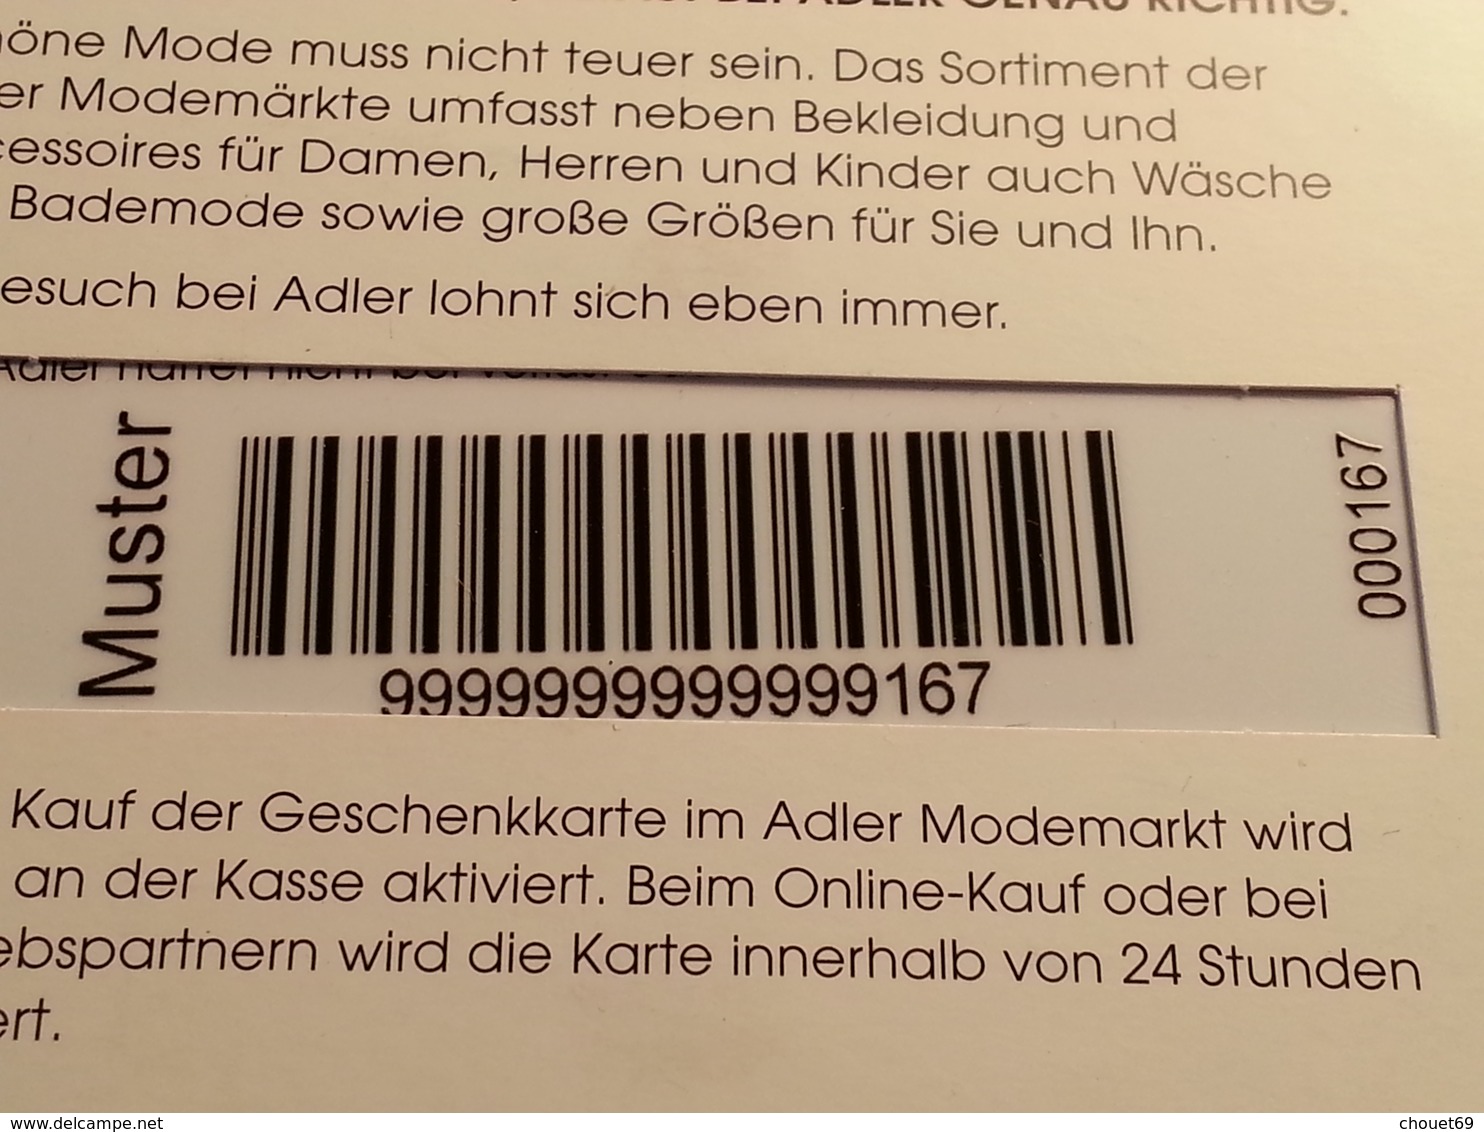 GERMANY - ADLER - MUSTER 25 Euros - DEMO TEST TRIAL CADEAU GIFT CARD (SACROC) - Cartes Cadeaux